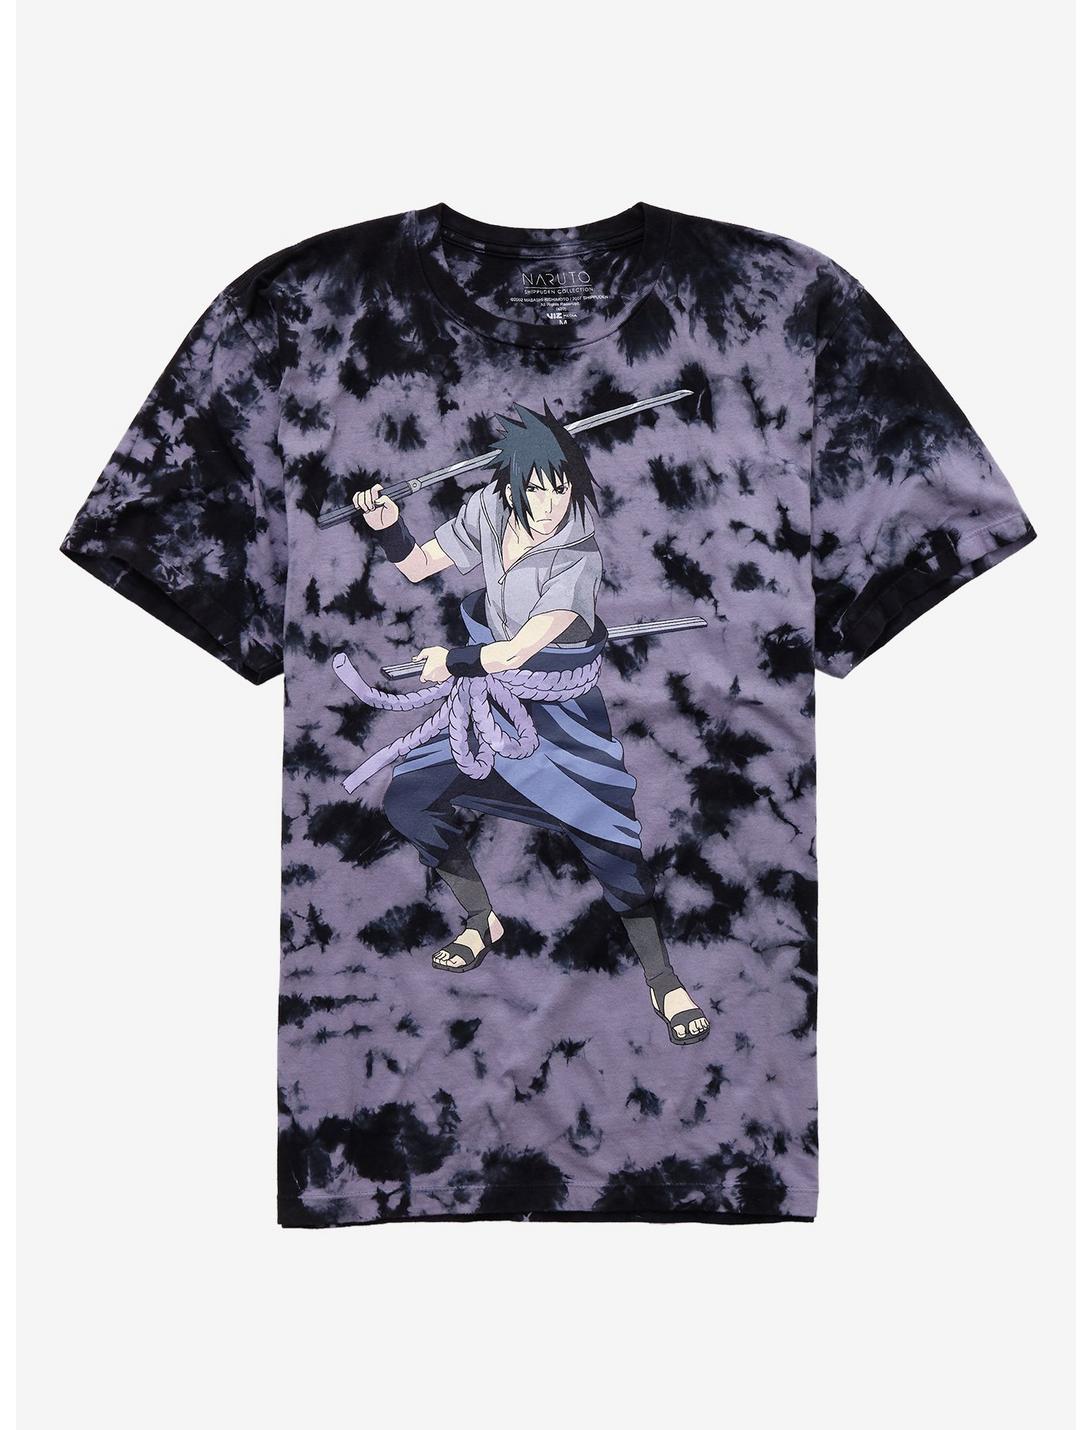 Sasuke Uchiha Shirt | lupon.gov.ph